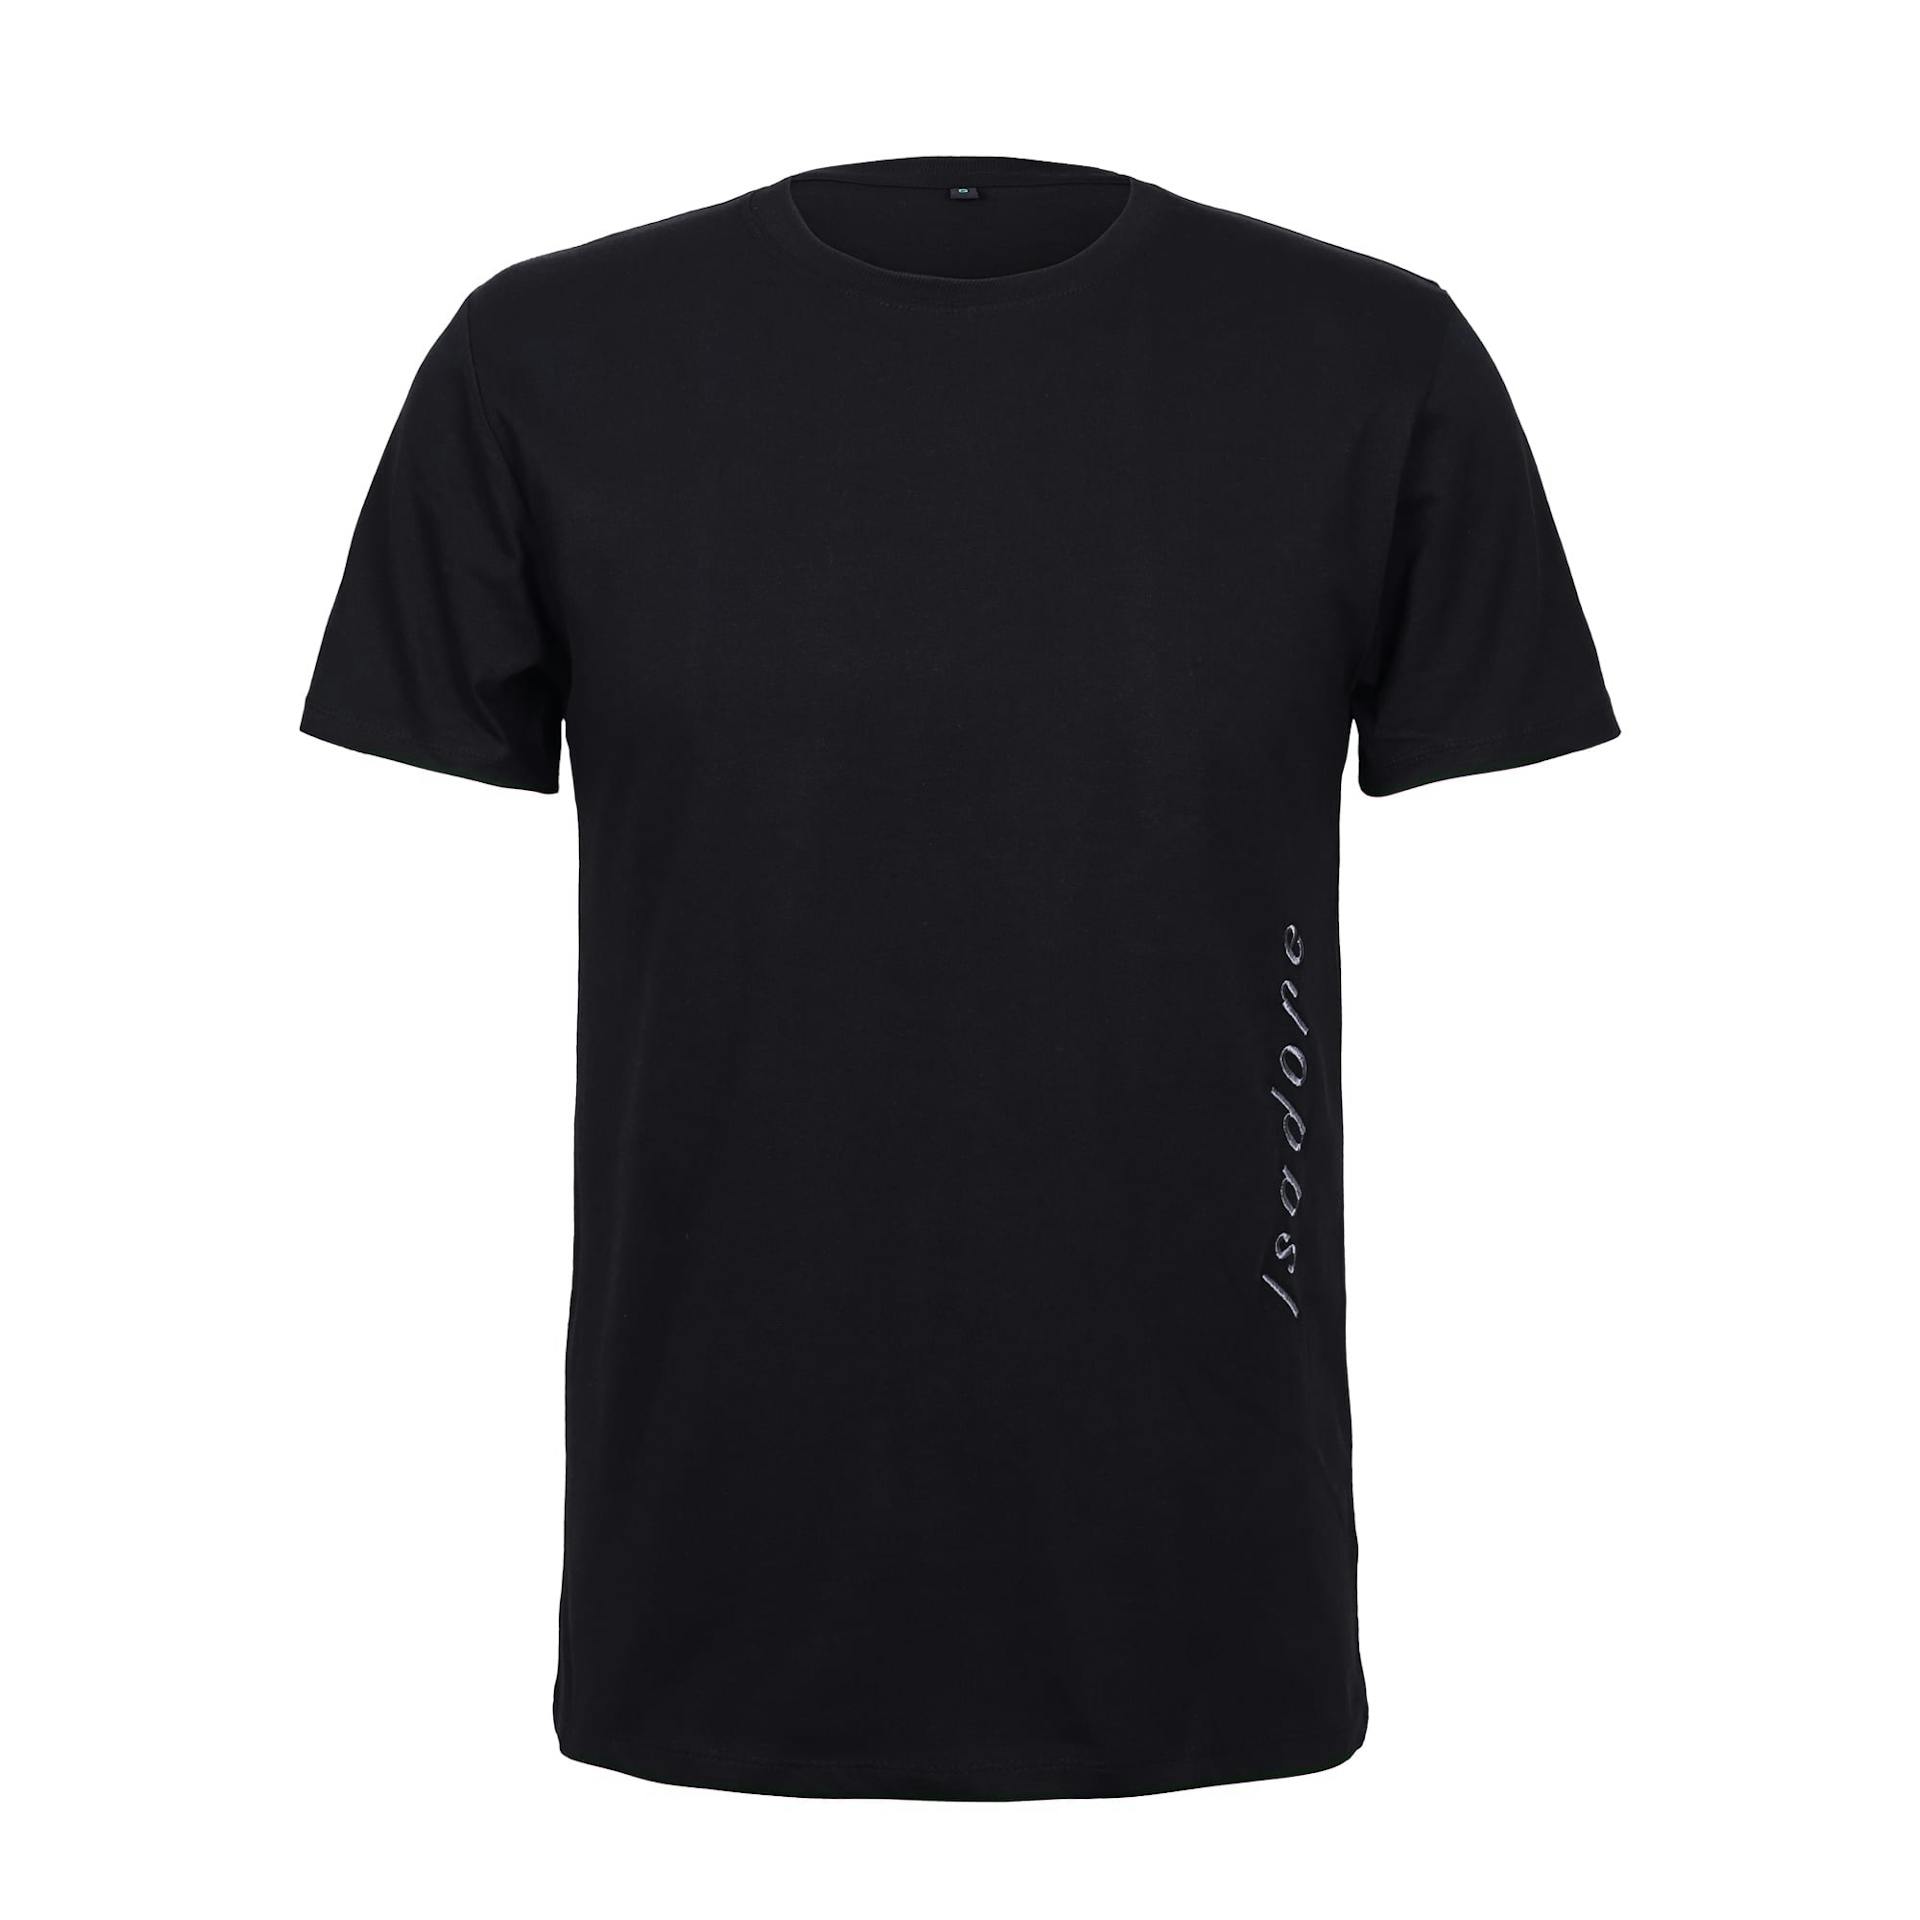 Unisex Logo T-Shirt - Black
                        